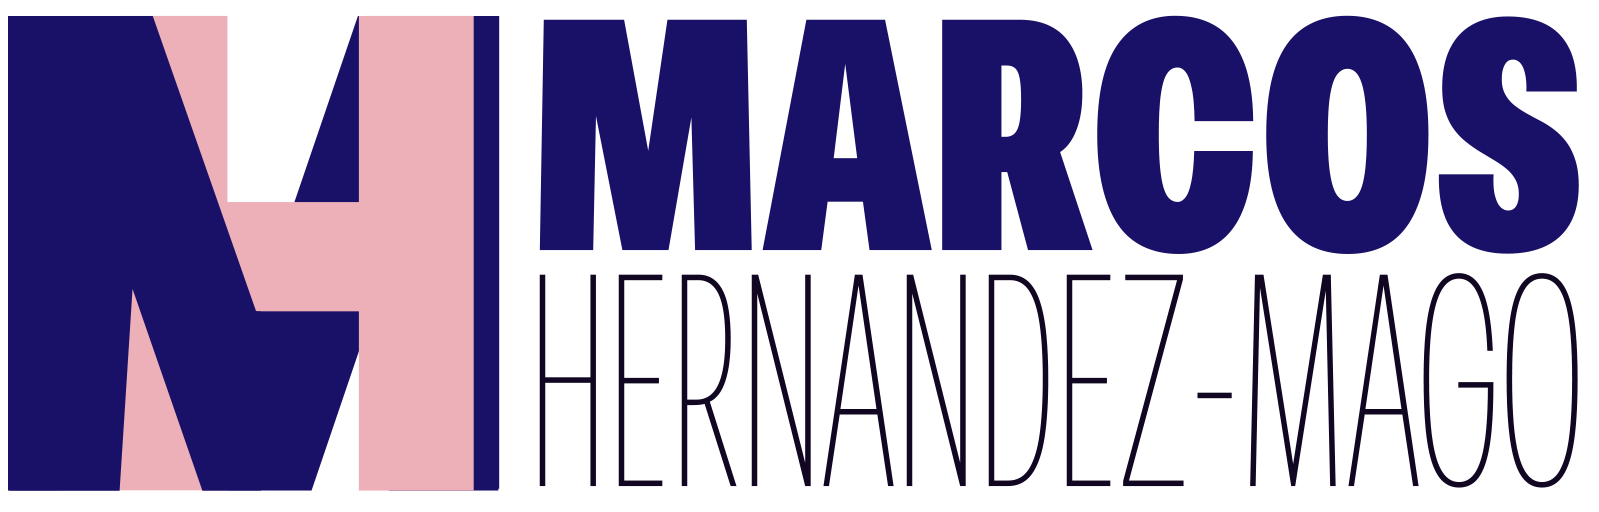 Logo MHM